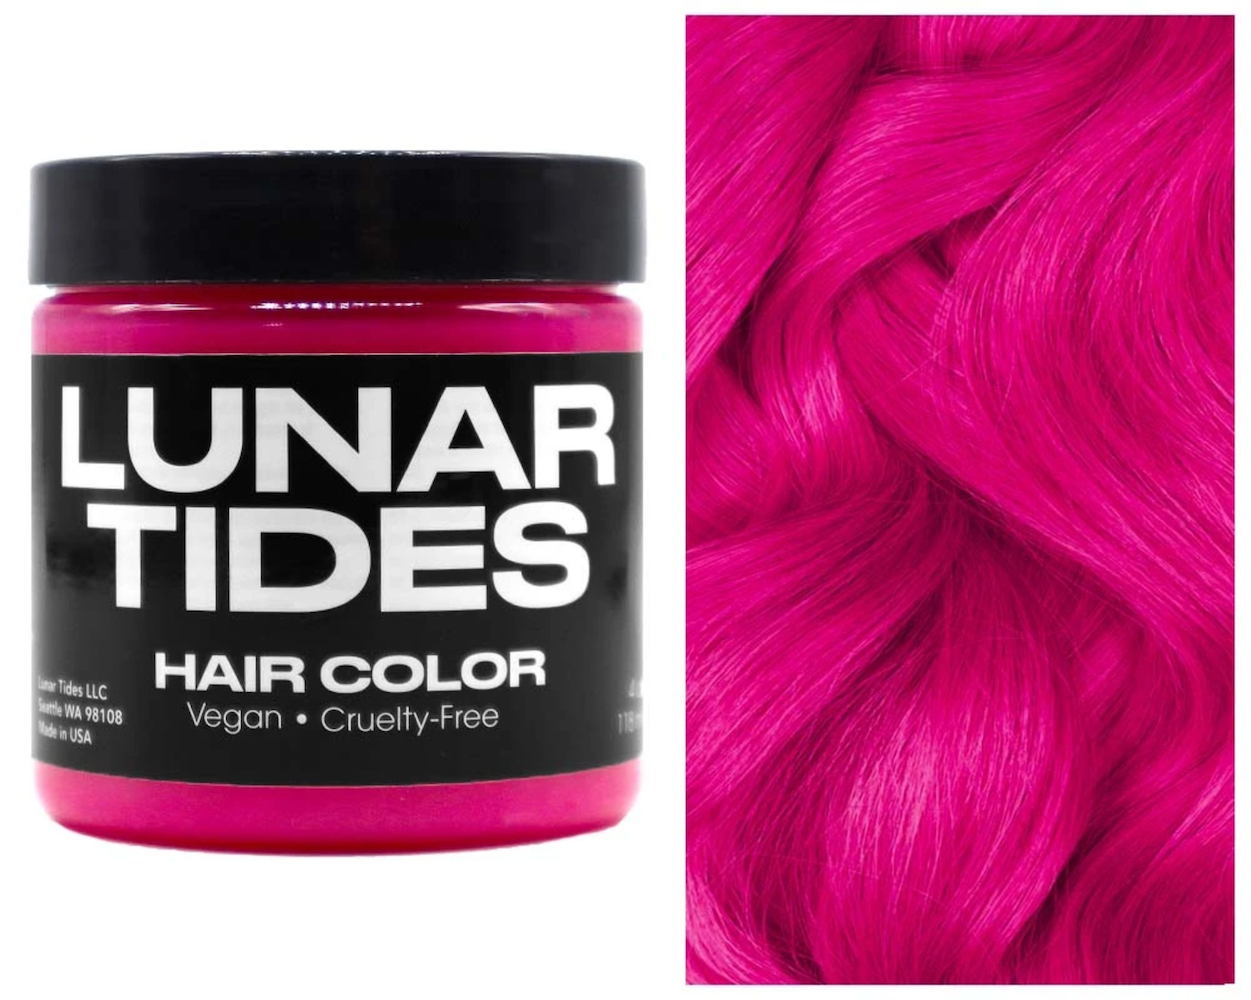 Lunar Tides Hair Dye - Lychee Pink